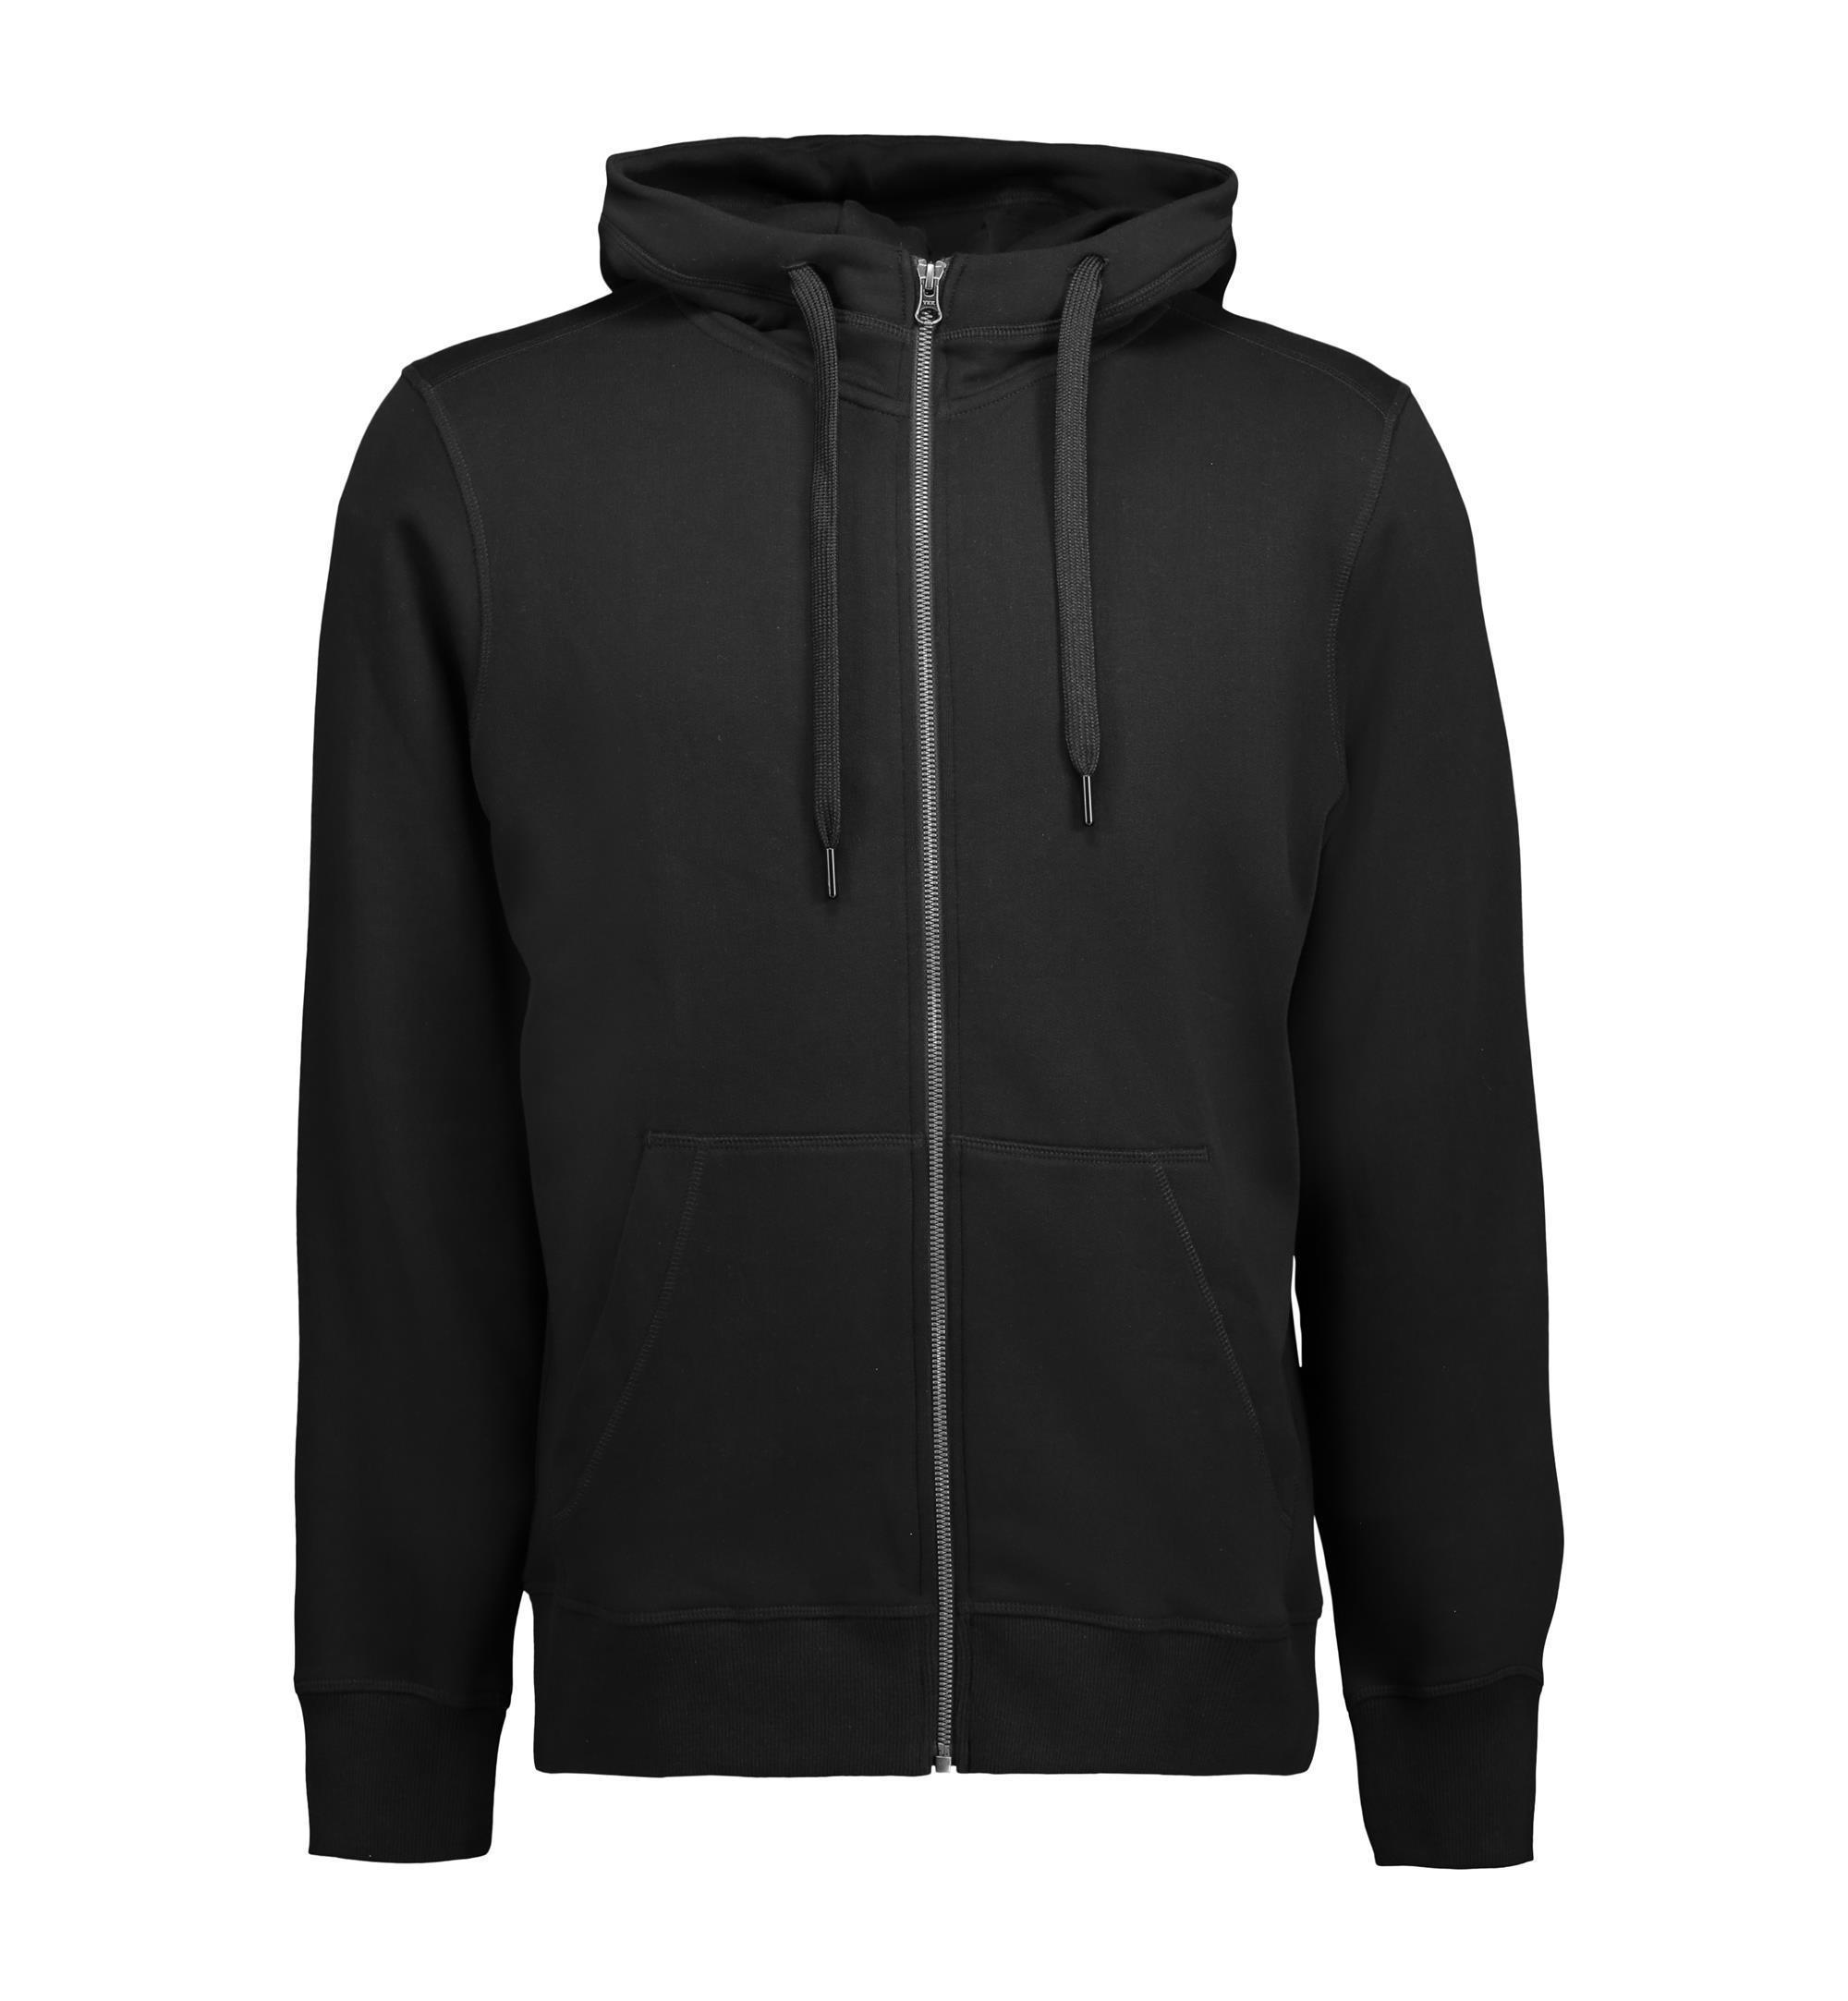 Men's CORE Hoodie Jacket Classic 300 g/m² ID Identity® Black 3XL